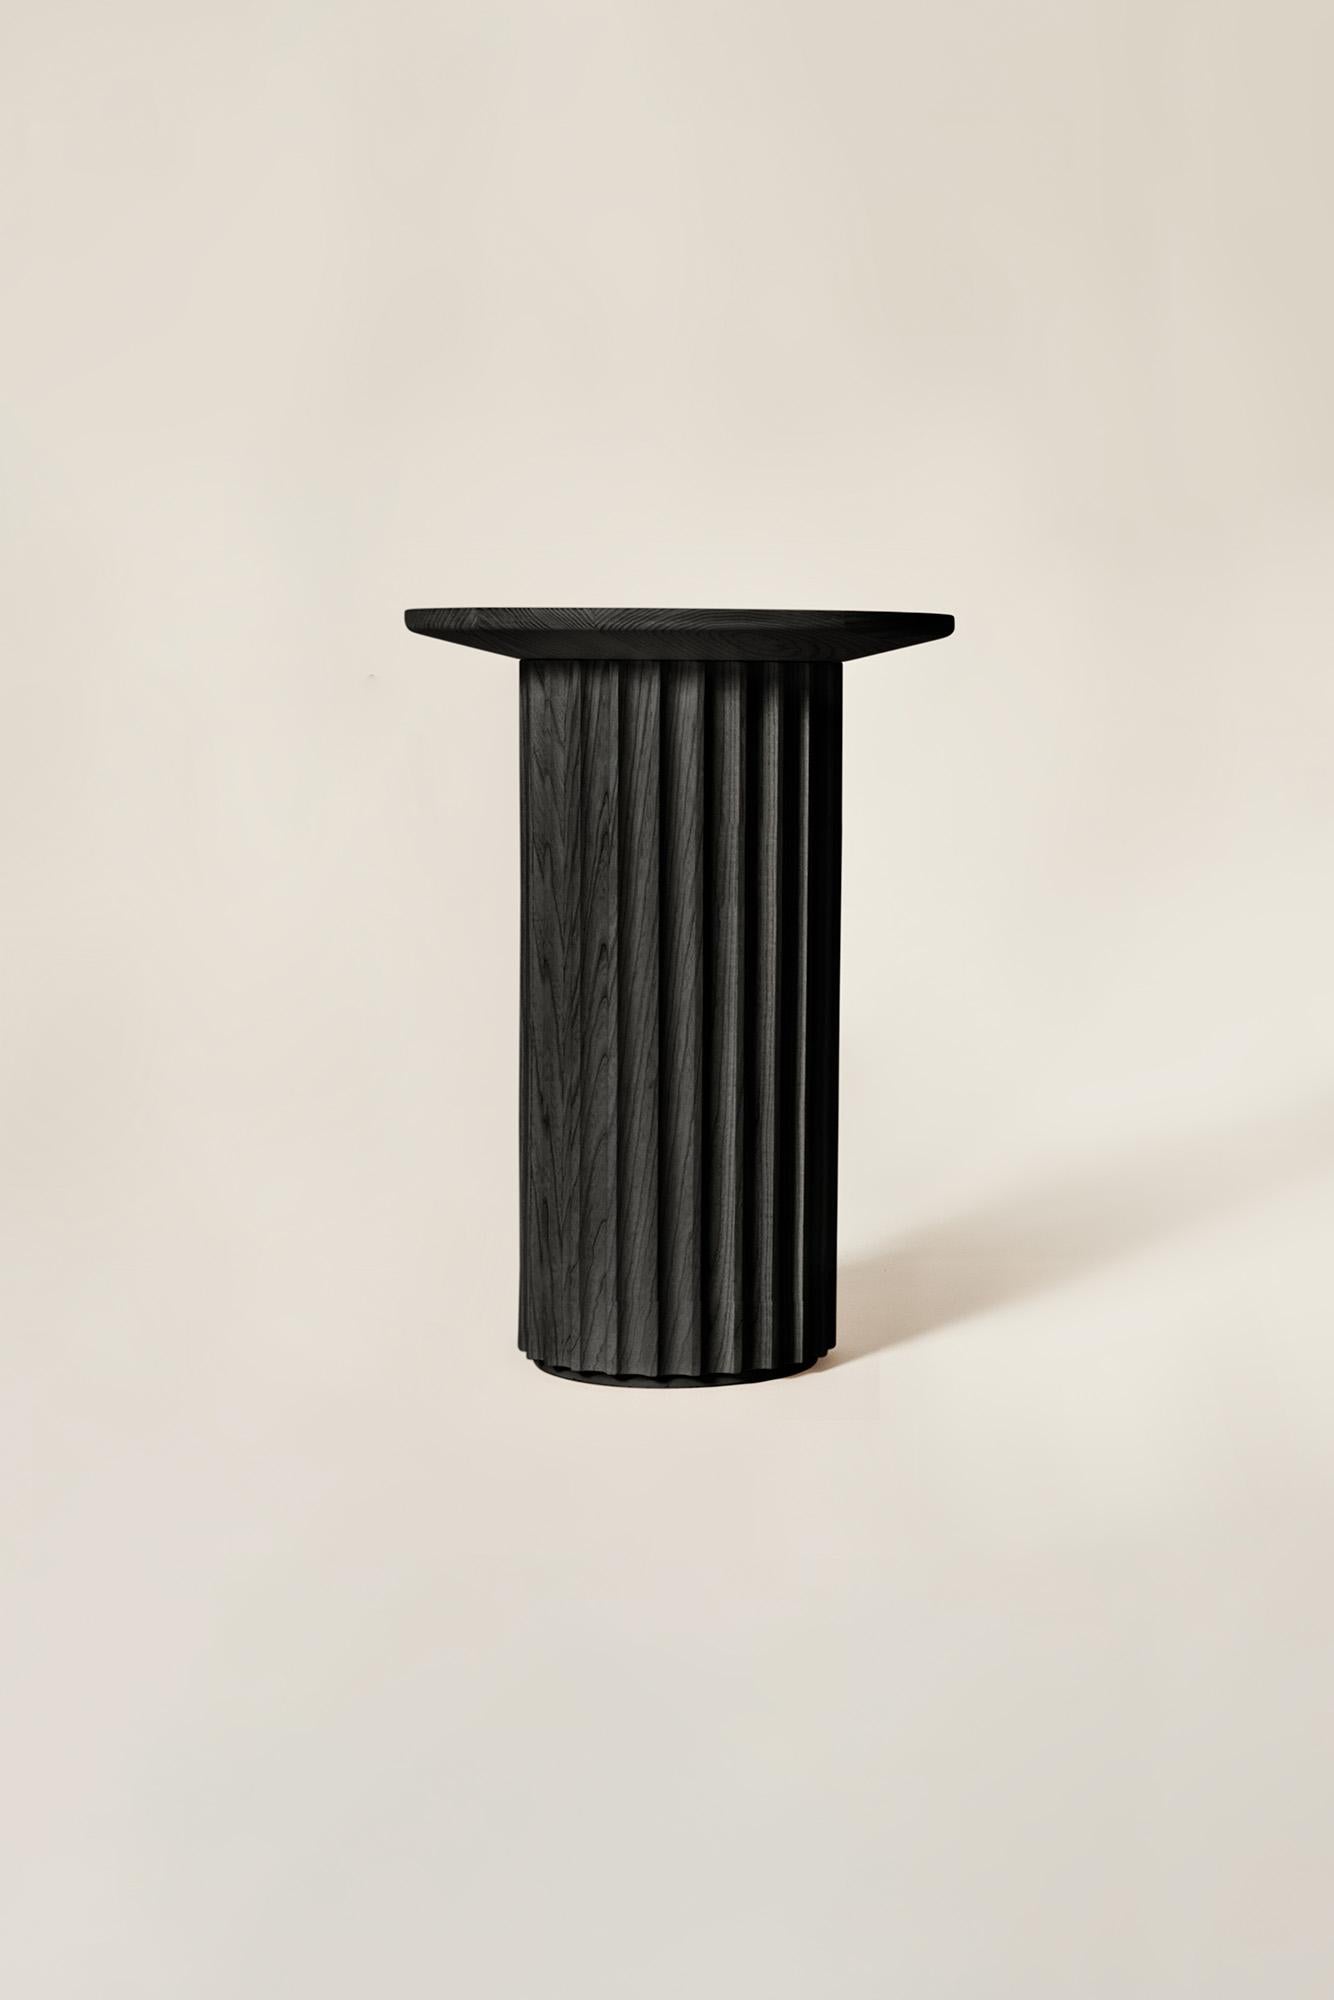 Capitello Solid Wood Coffee Table, Ash in Black Finish, Contemporary For Sale 3